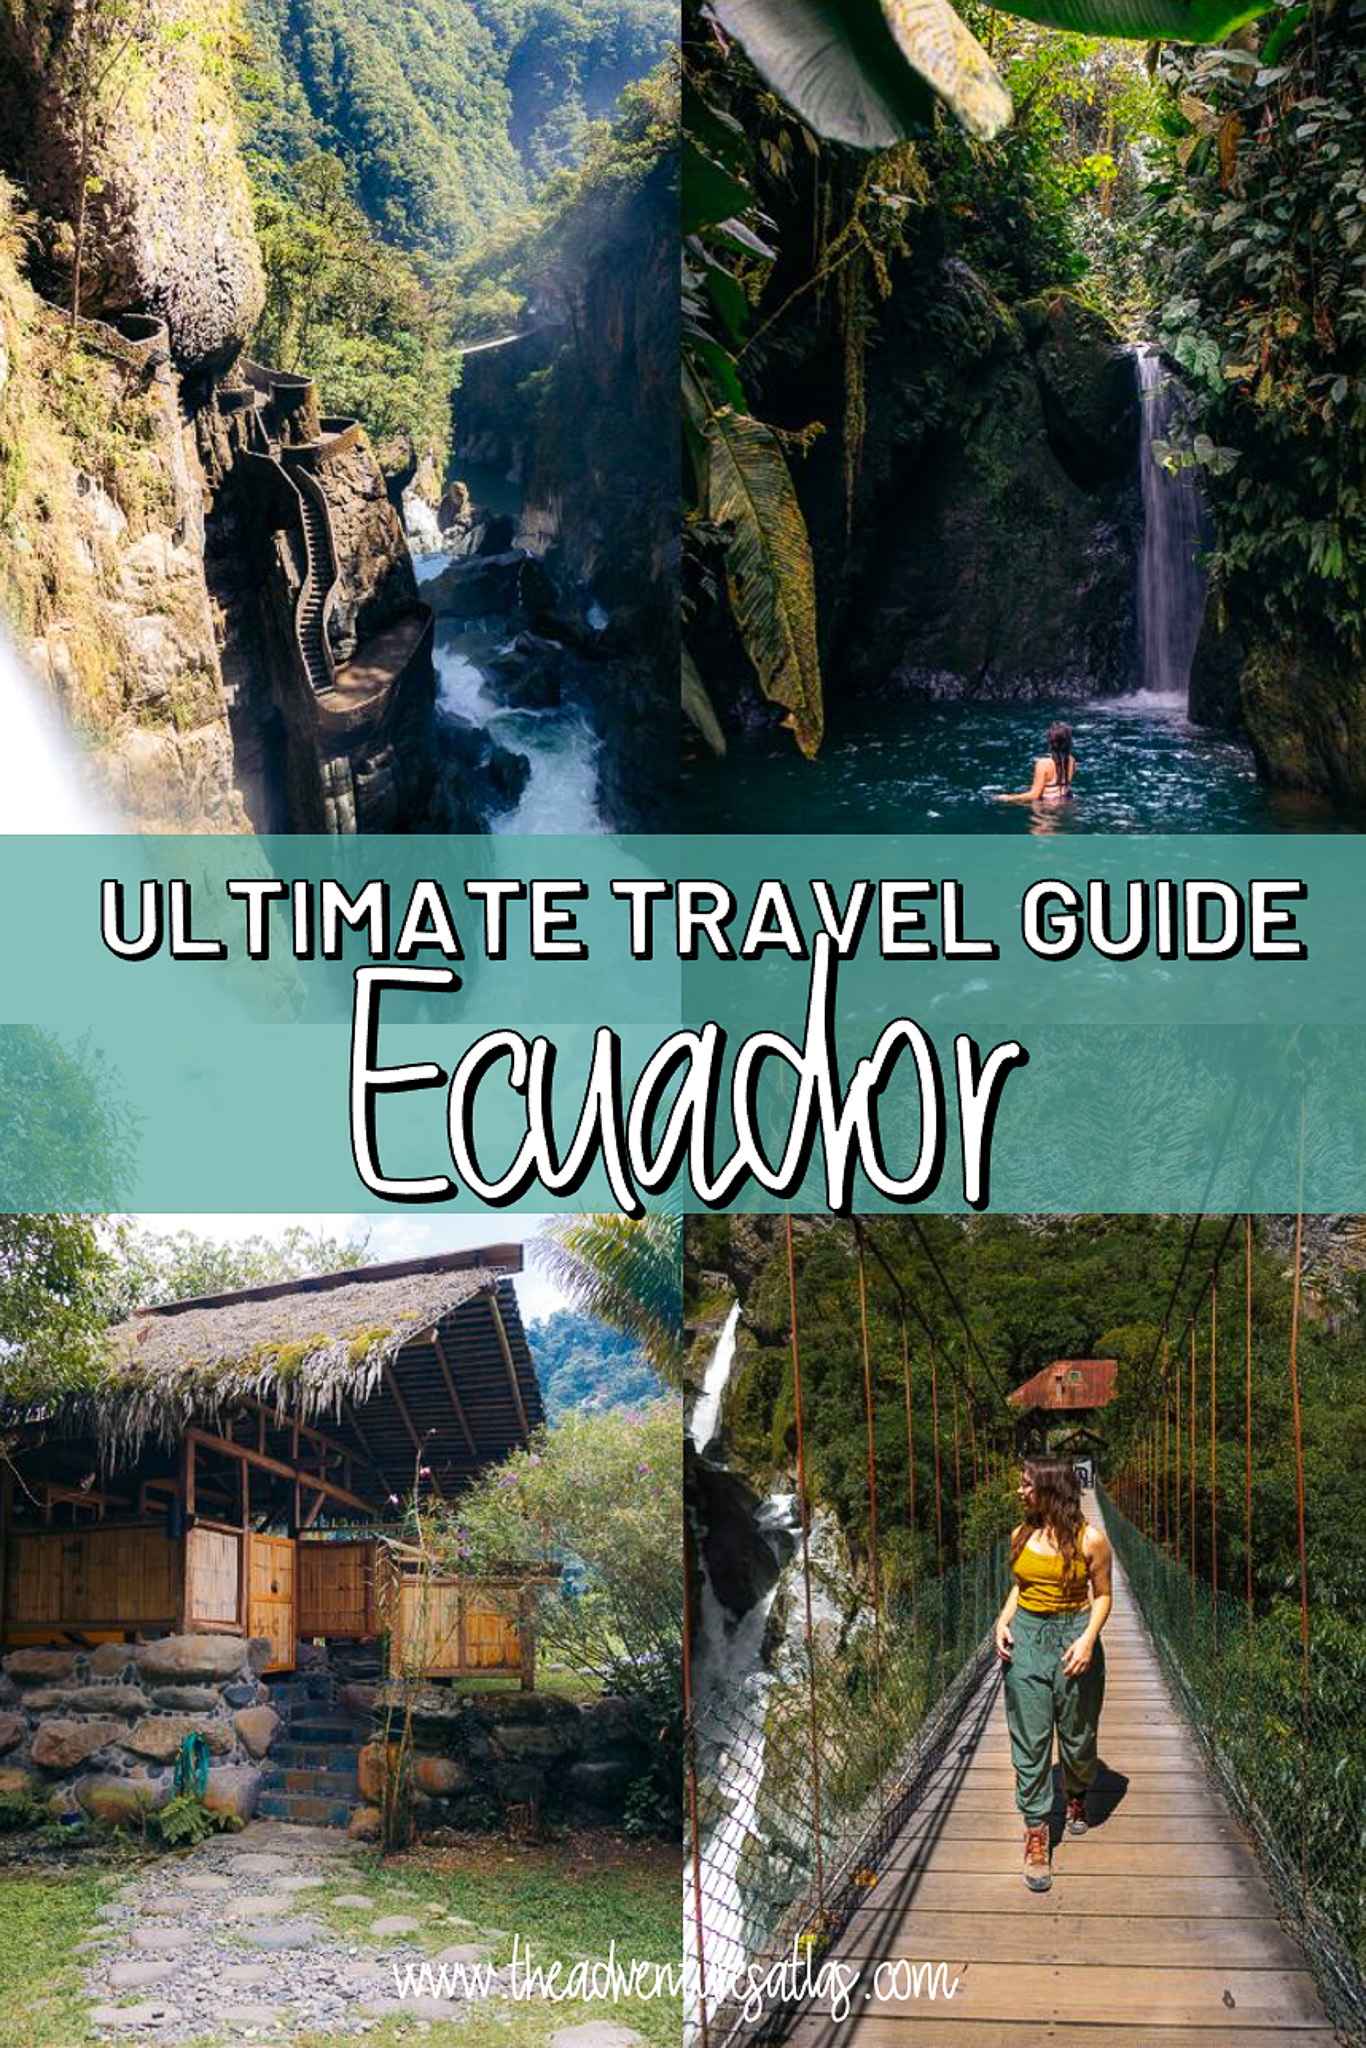 Ultimate travel guide to Ecuador